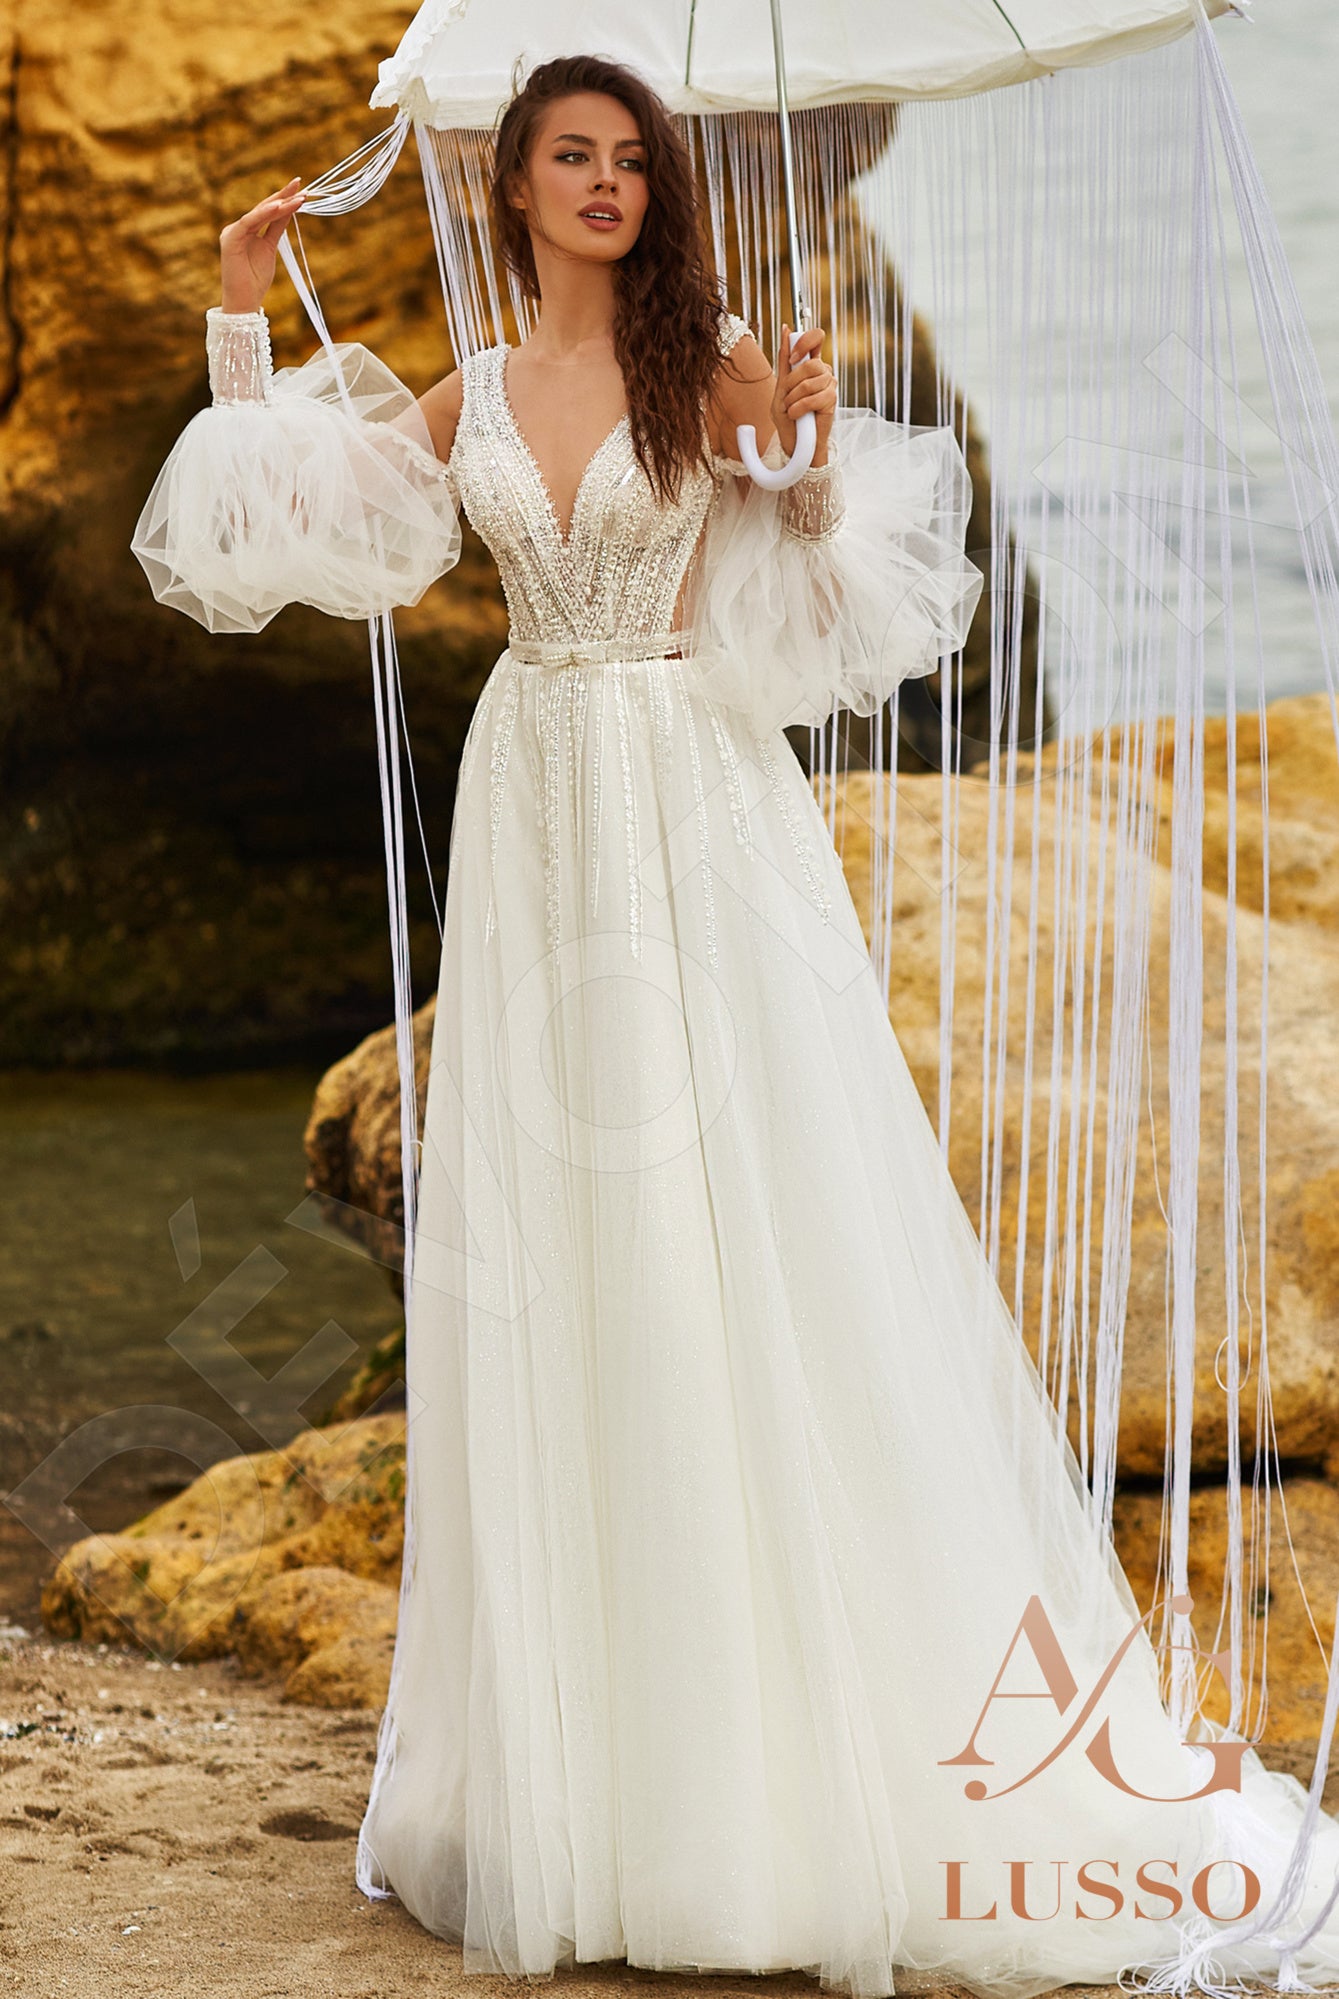 Giotta Open back A-line Long sleeve Wedding Dress Front